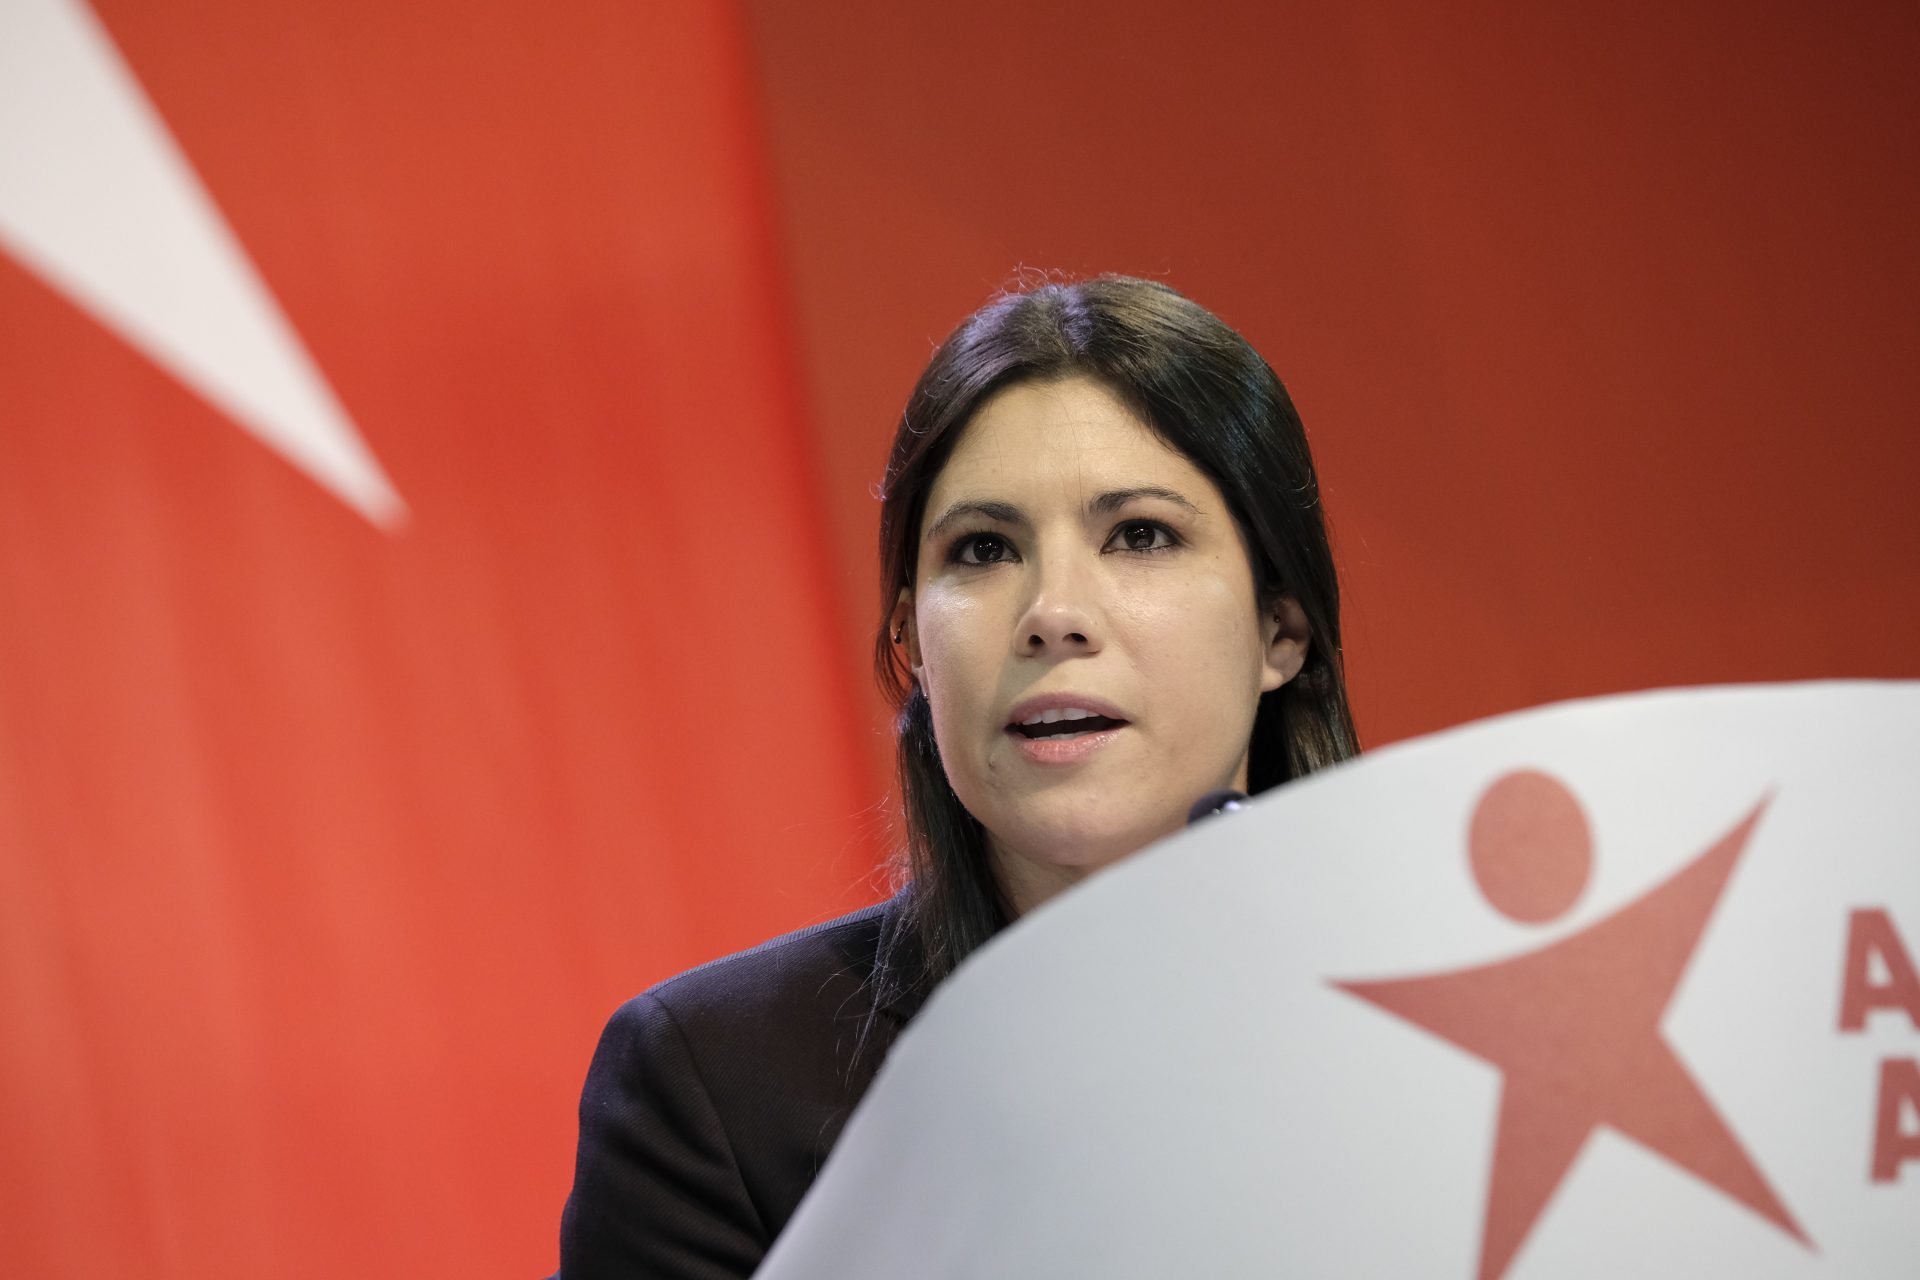 Mariana Mortágua critica escolha de ministros: “Só se pode esperar o pior”